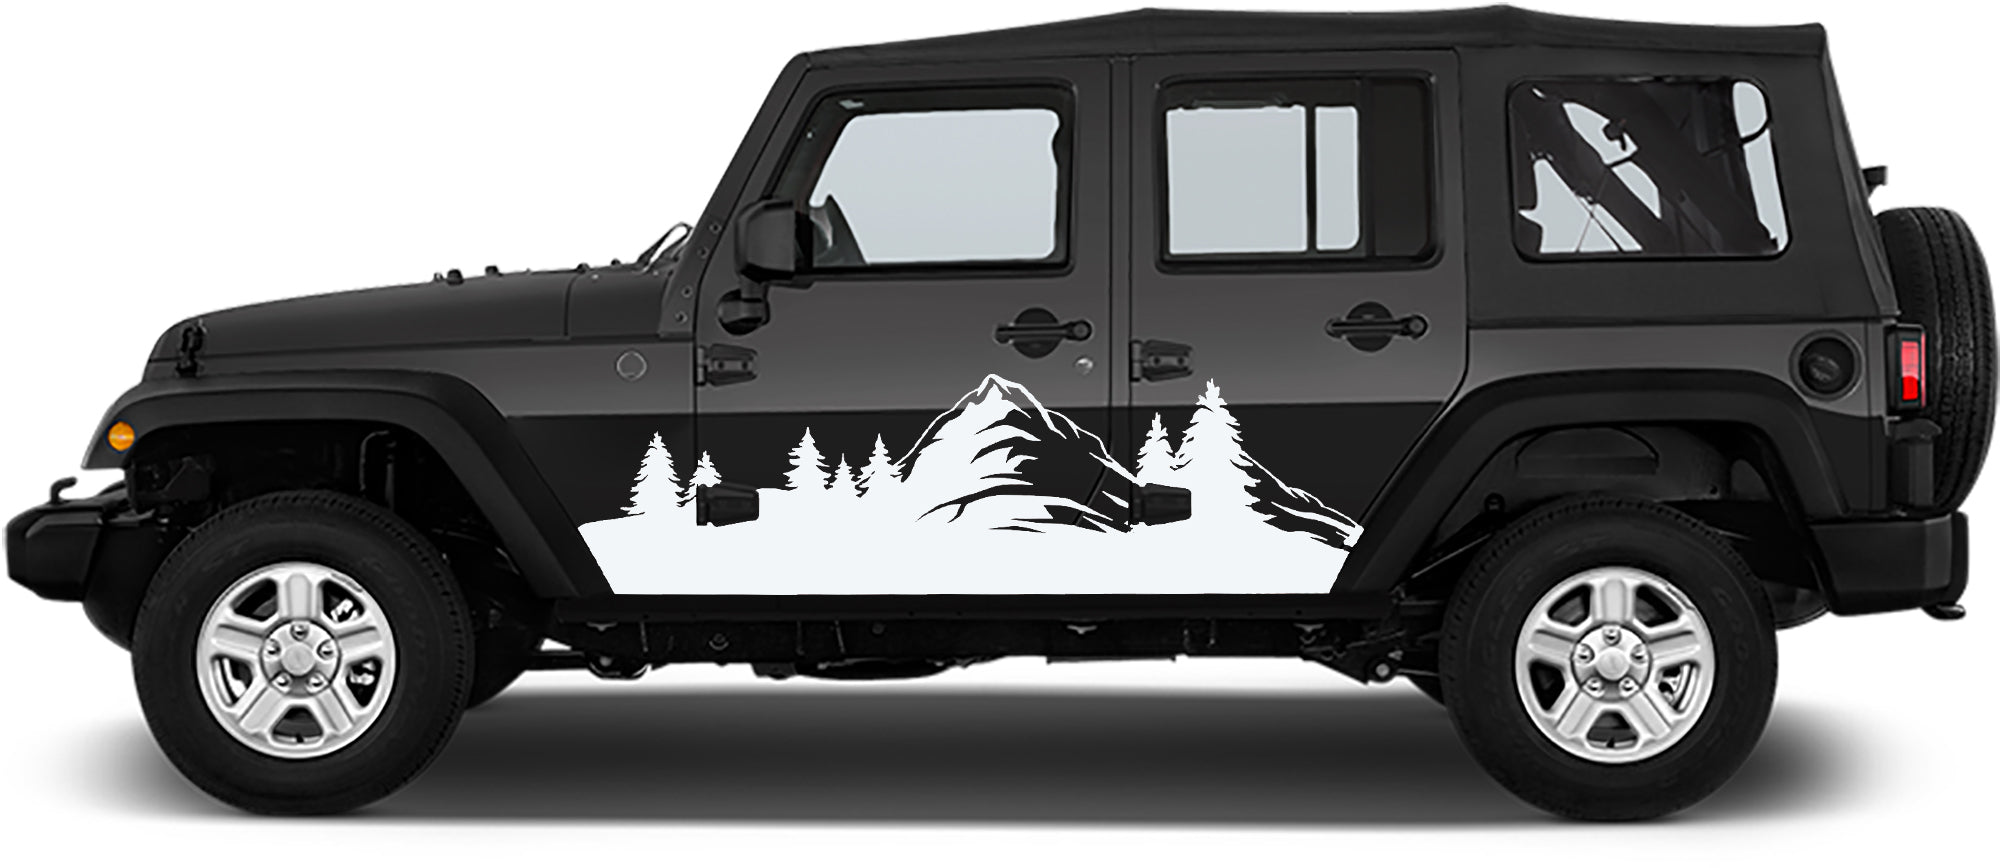 Jeep Wrangler JK Forest Adventure Side Decals (Pair) : Vinyl Graphics Kit fits (2007-2018)